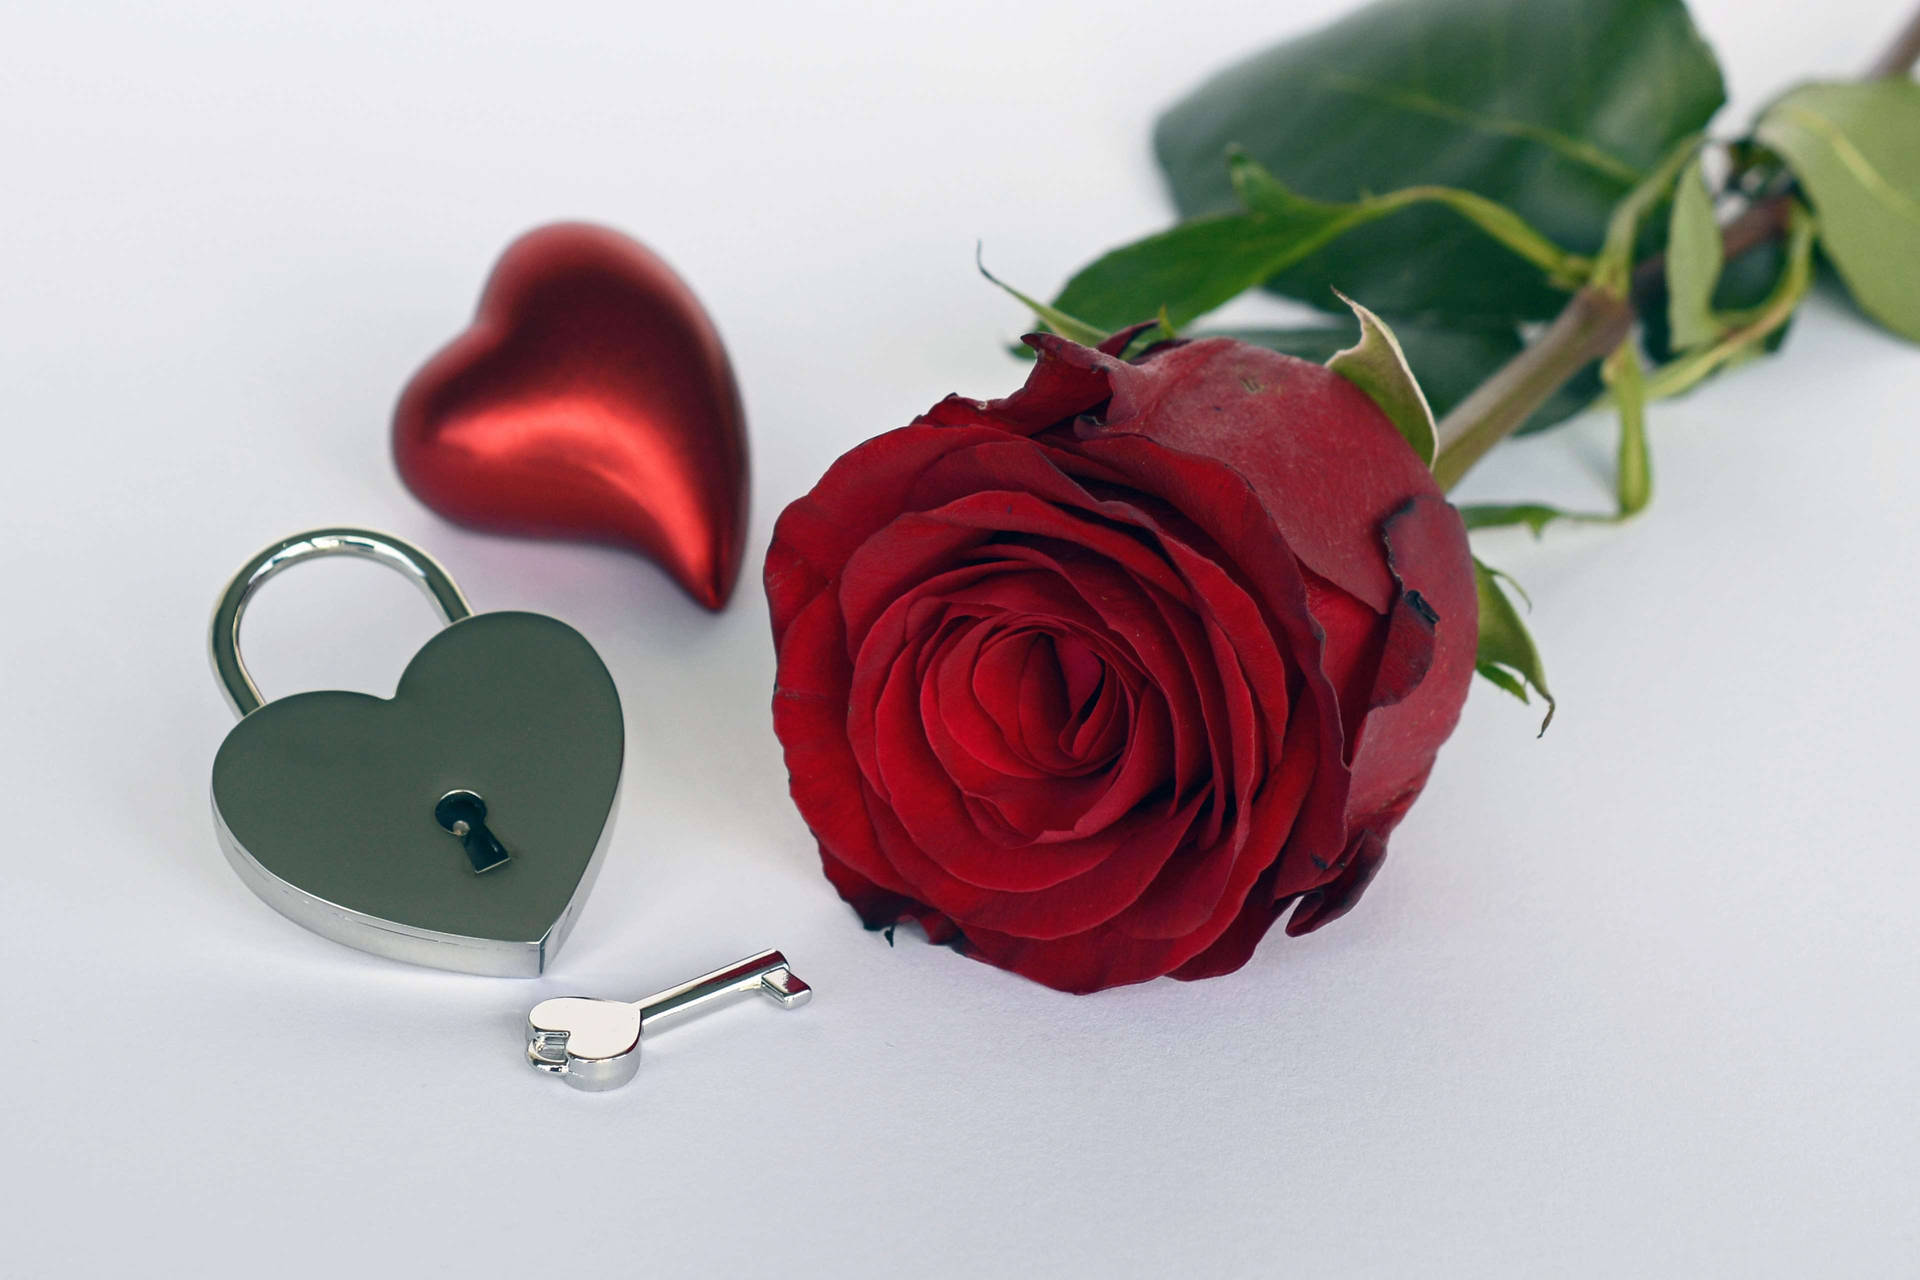 Romantic Rose And Heart-Shaped Lock Wallpaper